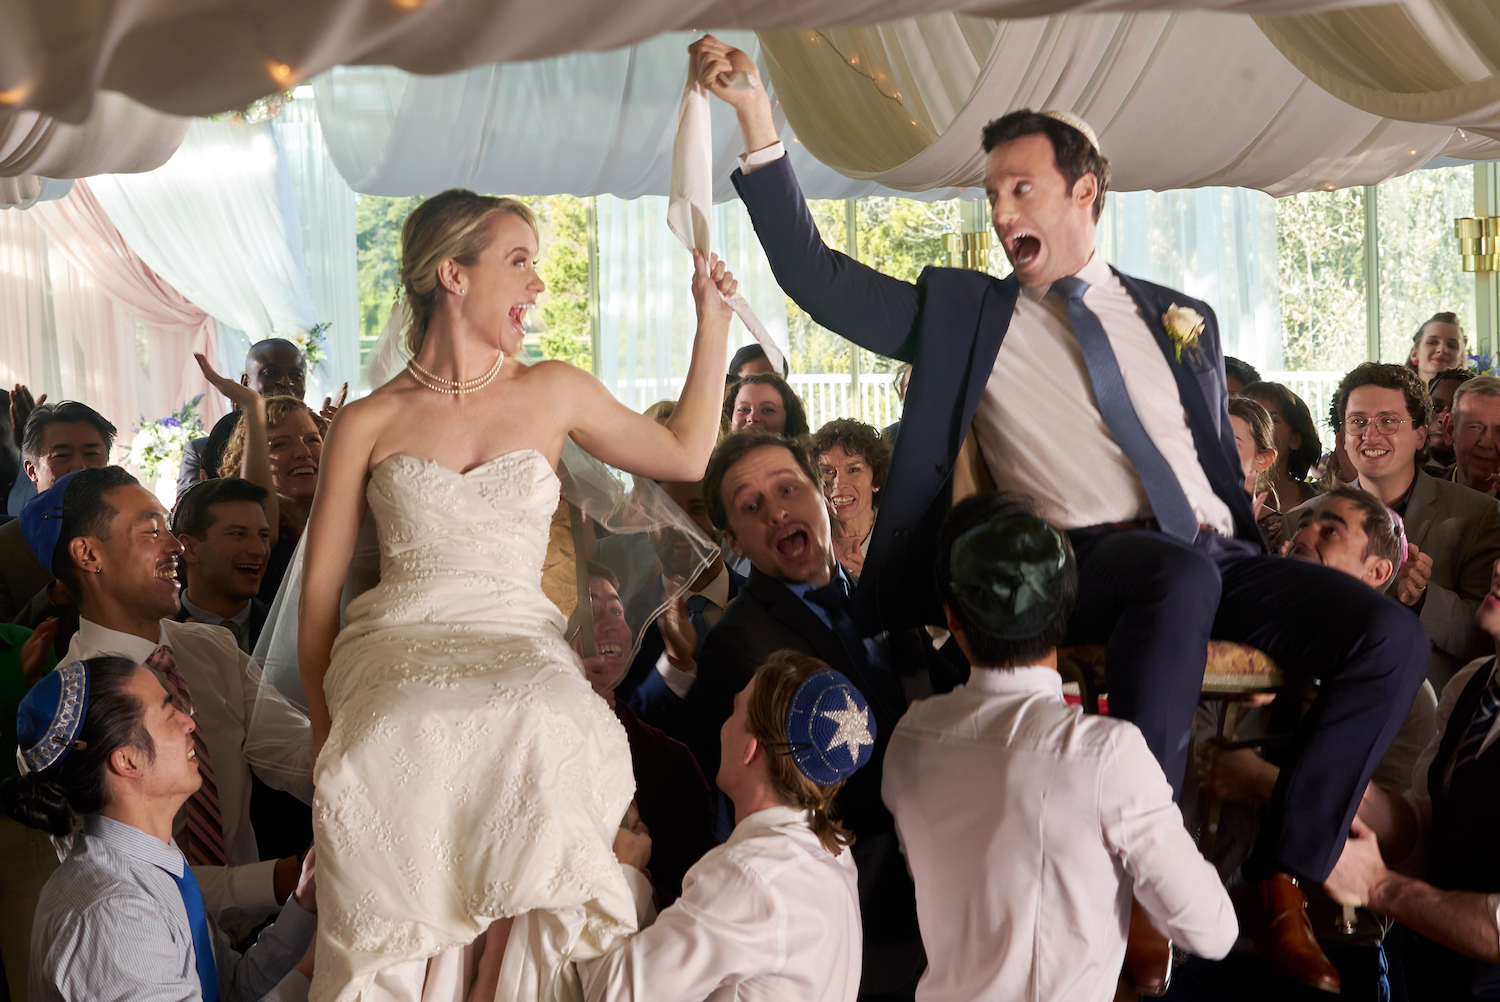 THE WEDDING DATE': CONTRACT ROMANCE REVEALS TRUE LOVE